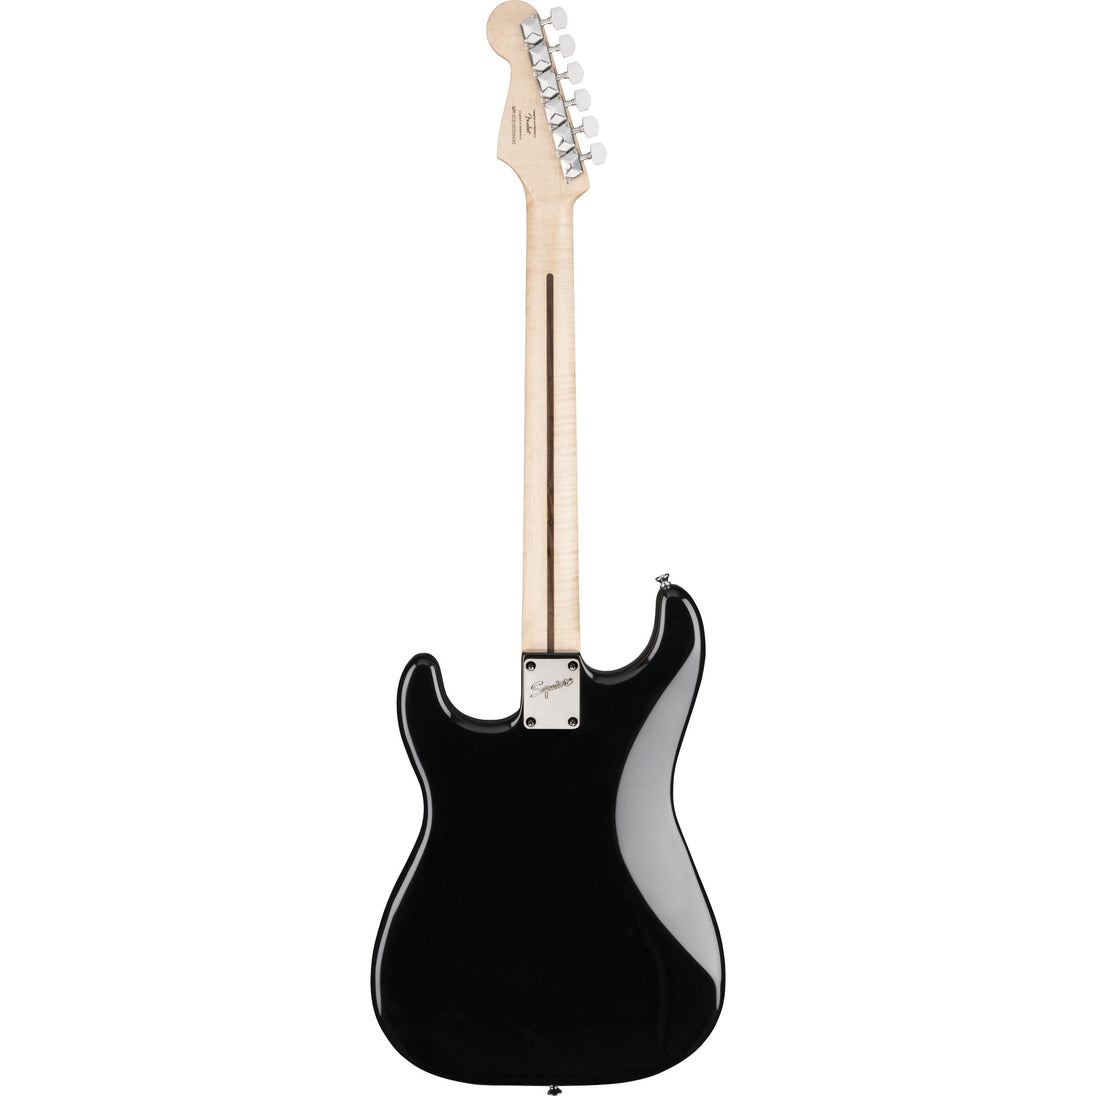 Squier bullet Stratocaster HT Electric Guitar | Black